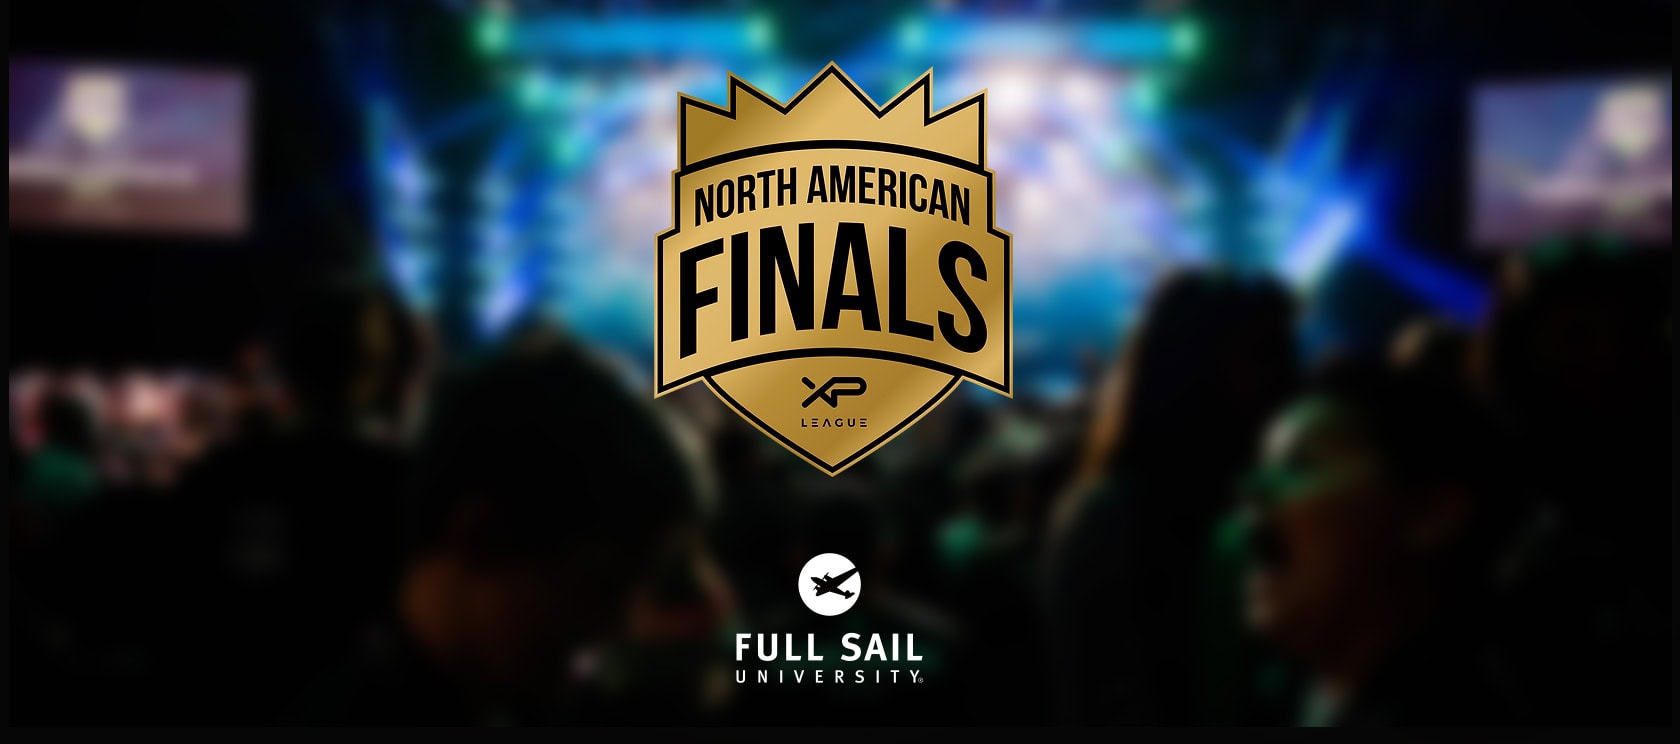 XP League North American Finals return to Full Sail University in June